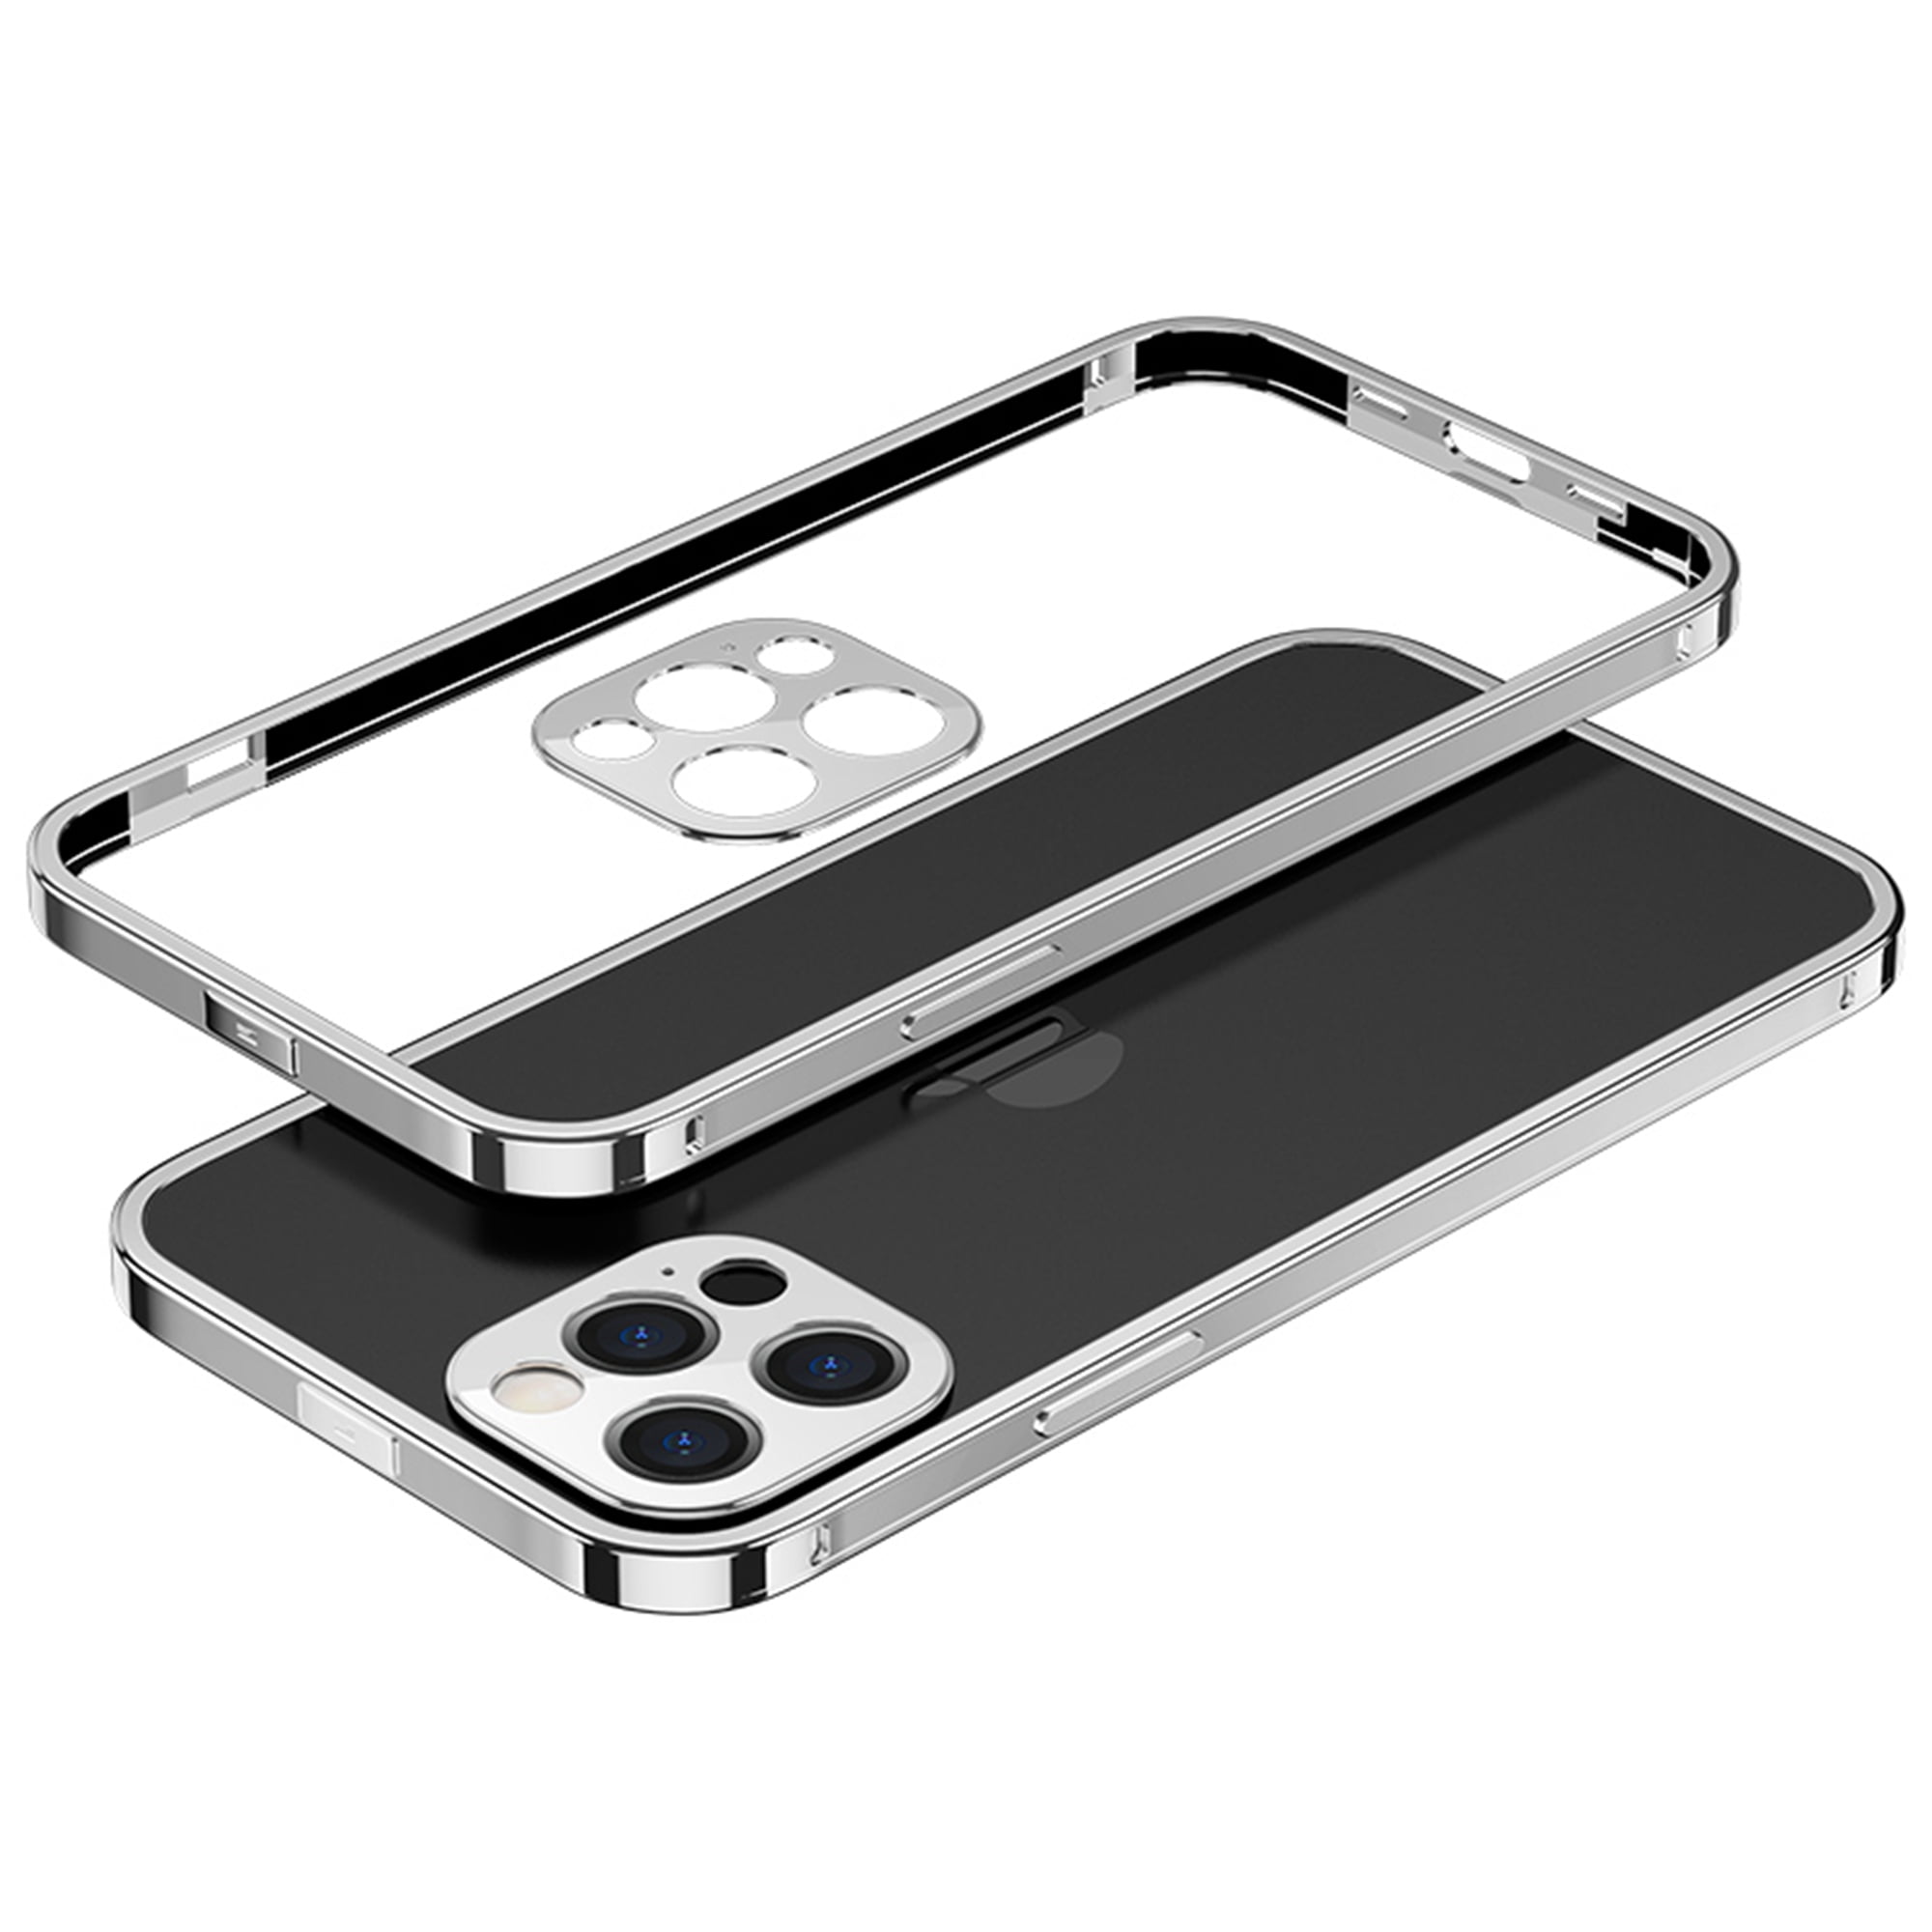 Aluminum Frame Metal Bumper Frame Slim Hard Case Cover for iPhone12 Pro  Max, Metal Frame Armor with Soft Inner Bumper, Raised Edge Protection  (Black